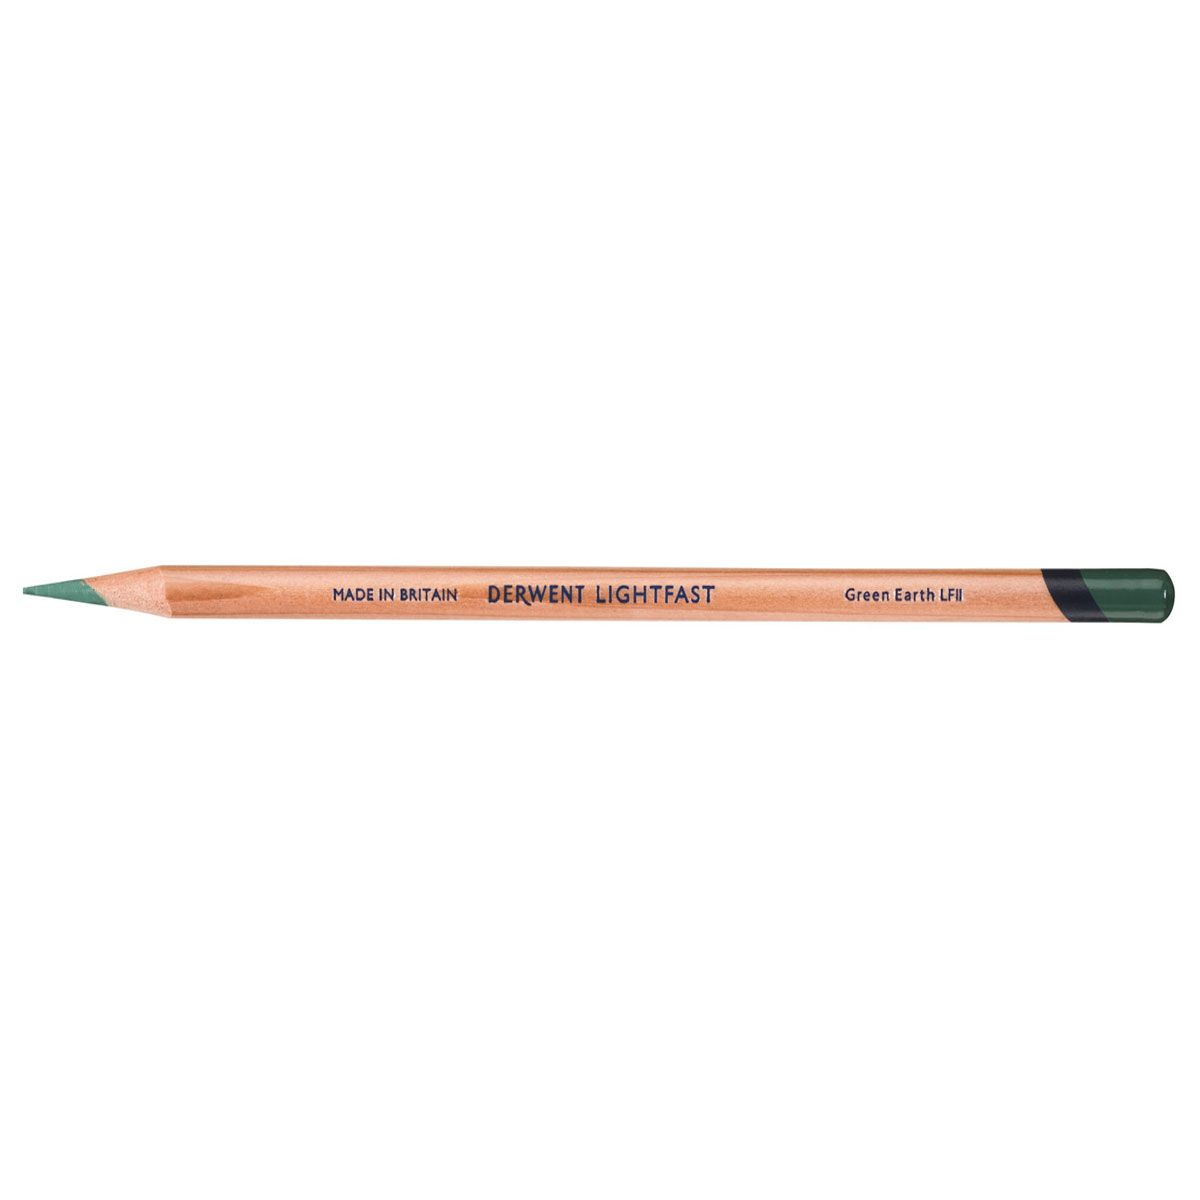 NEW Derwent Lightfast Pencil Colour: Green Earth